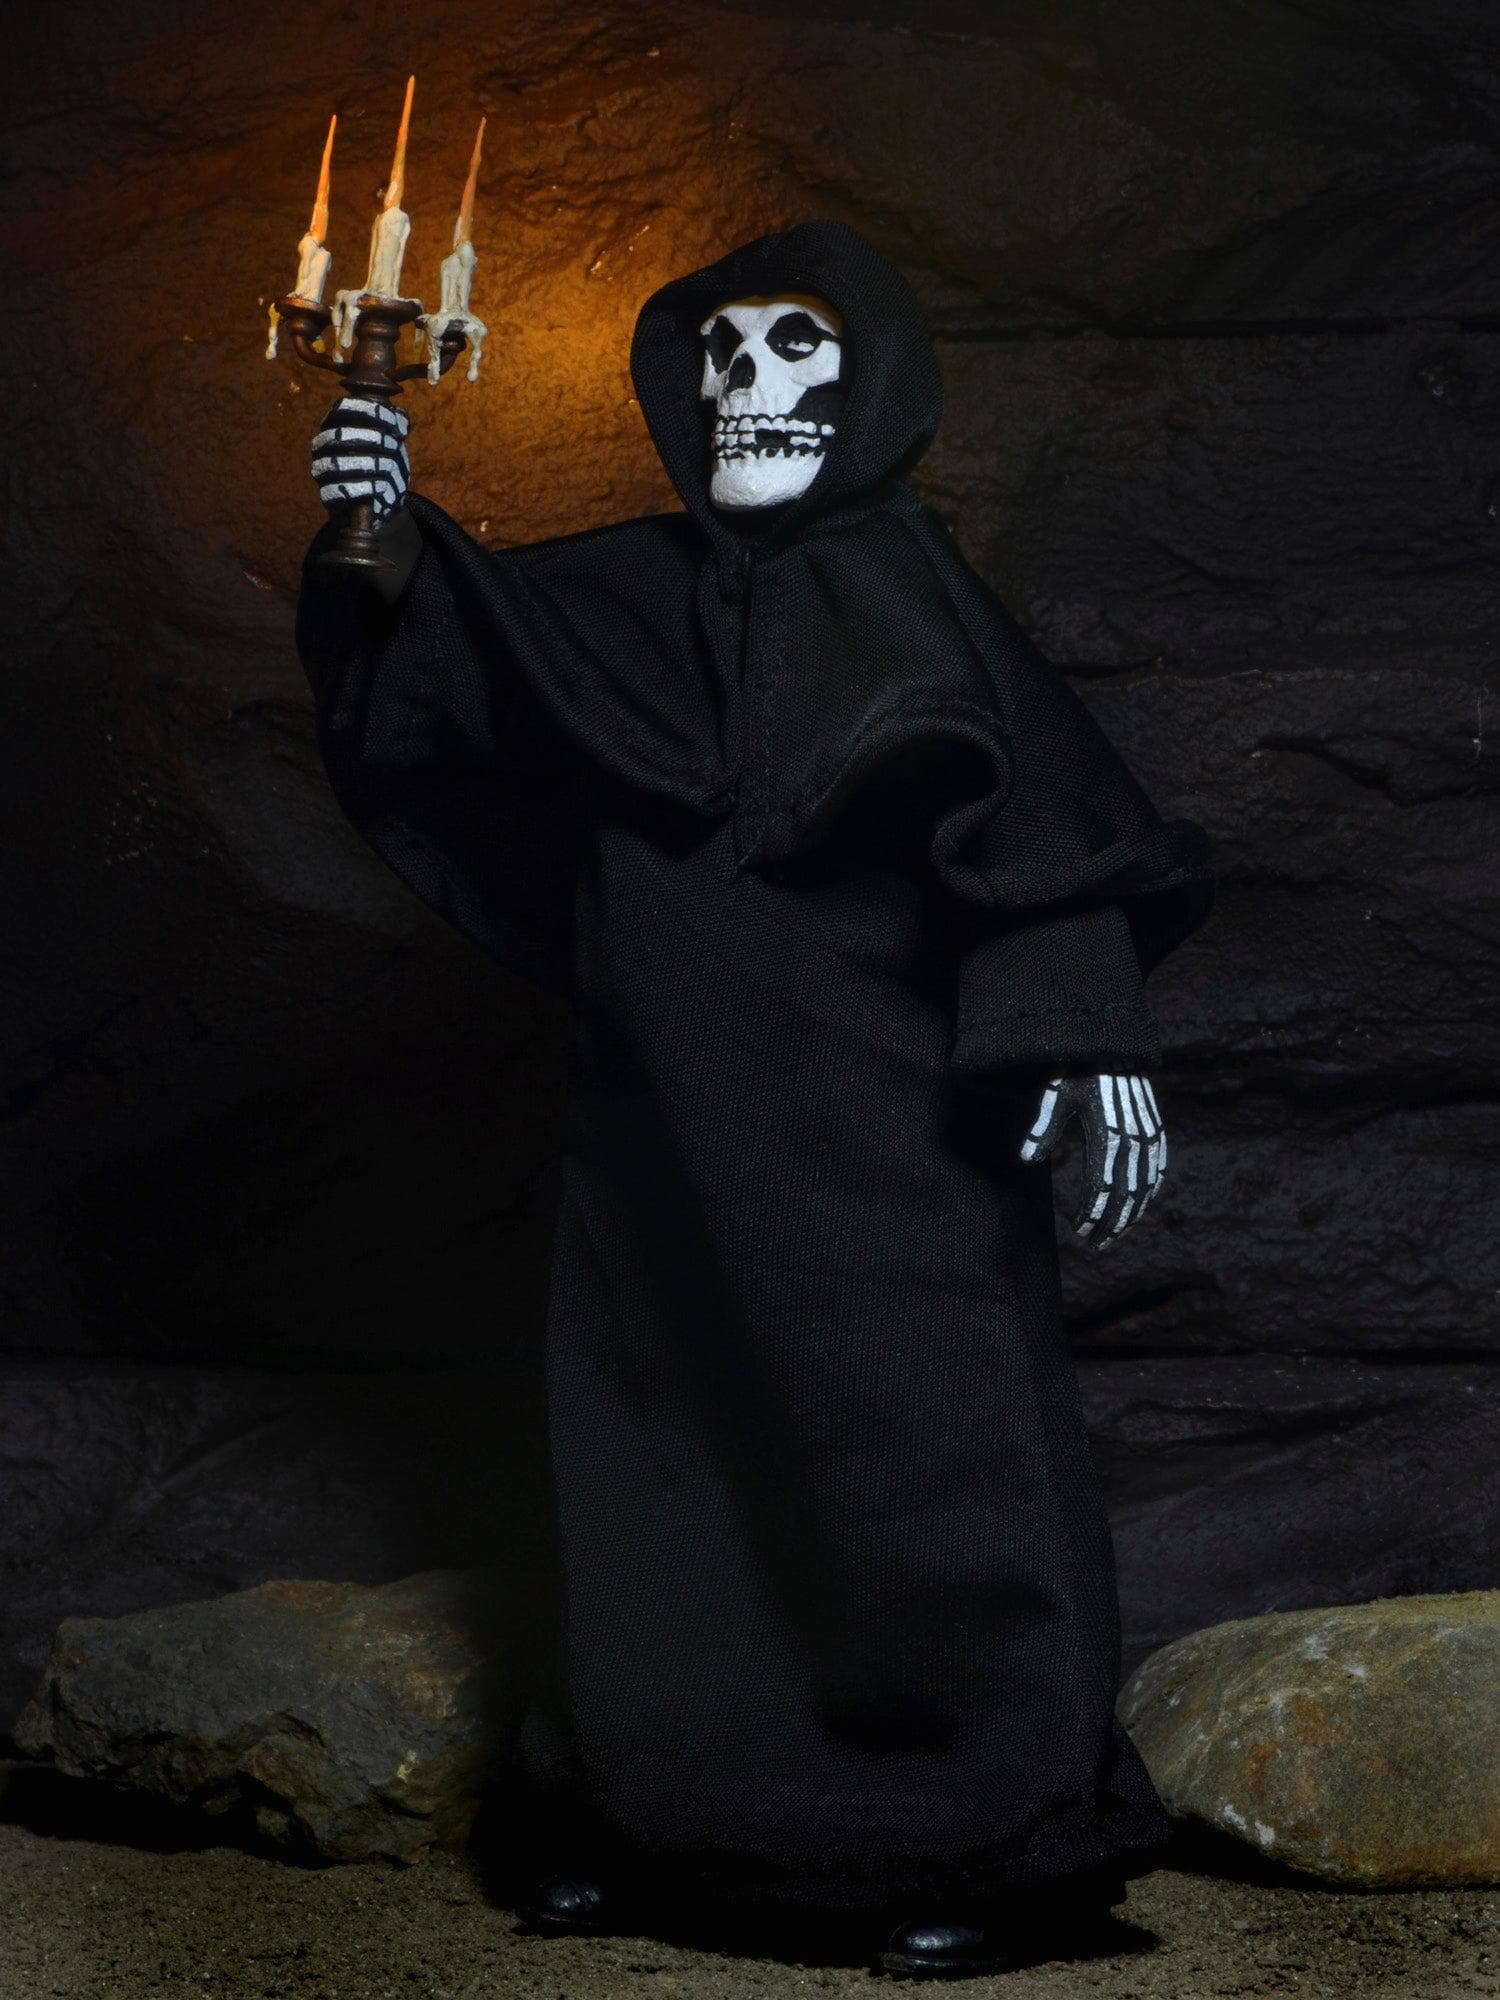 NECA - Misfits - 8" Clothed Figure - The Fiend (Black Robe) - costumes.com